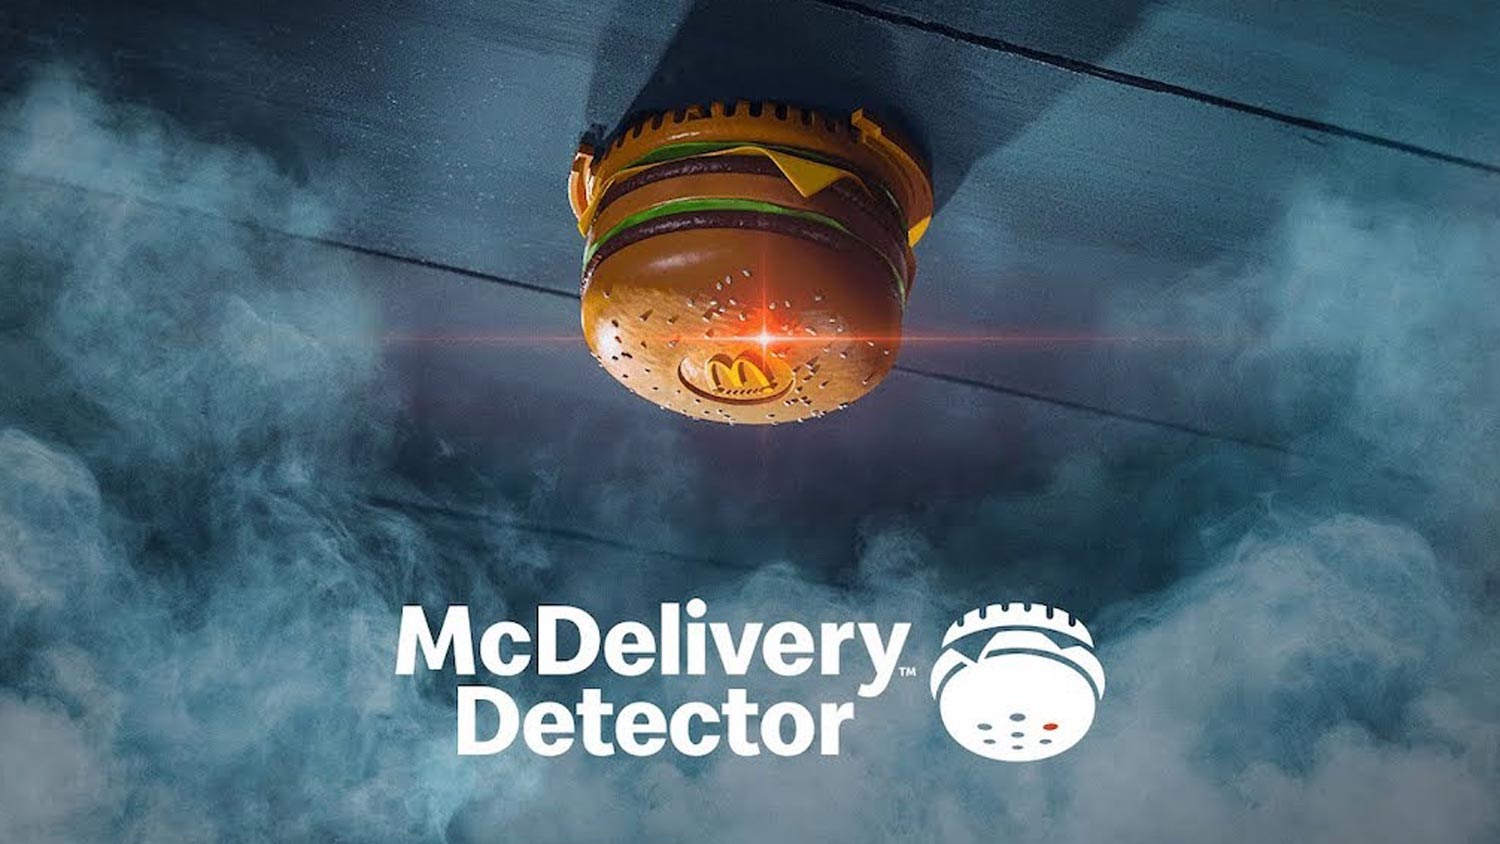 McDelivery Detector Menghantar Saranan Memesan McDonald’s Jika Mengesan Makanan Terbakar Di Dapur